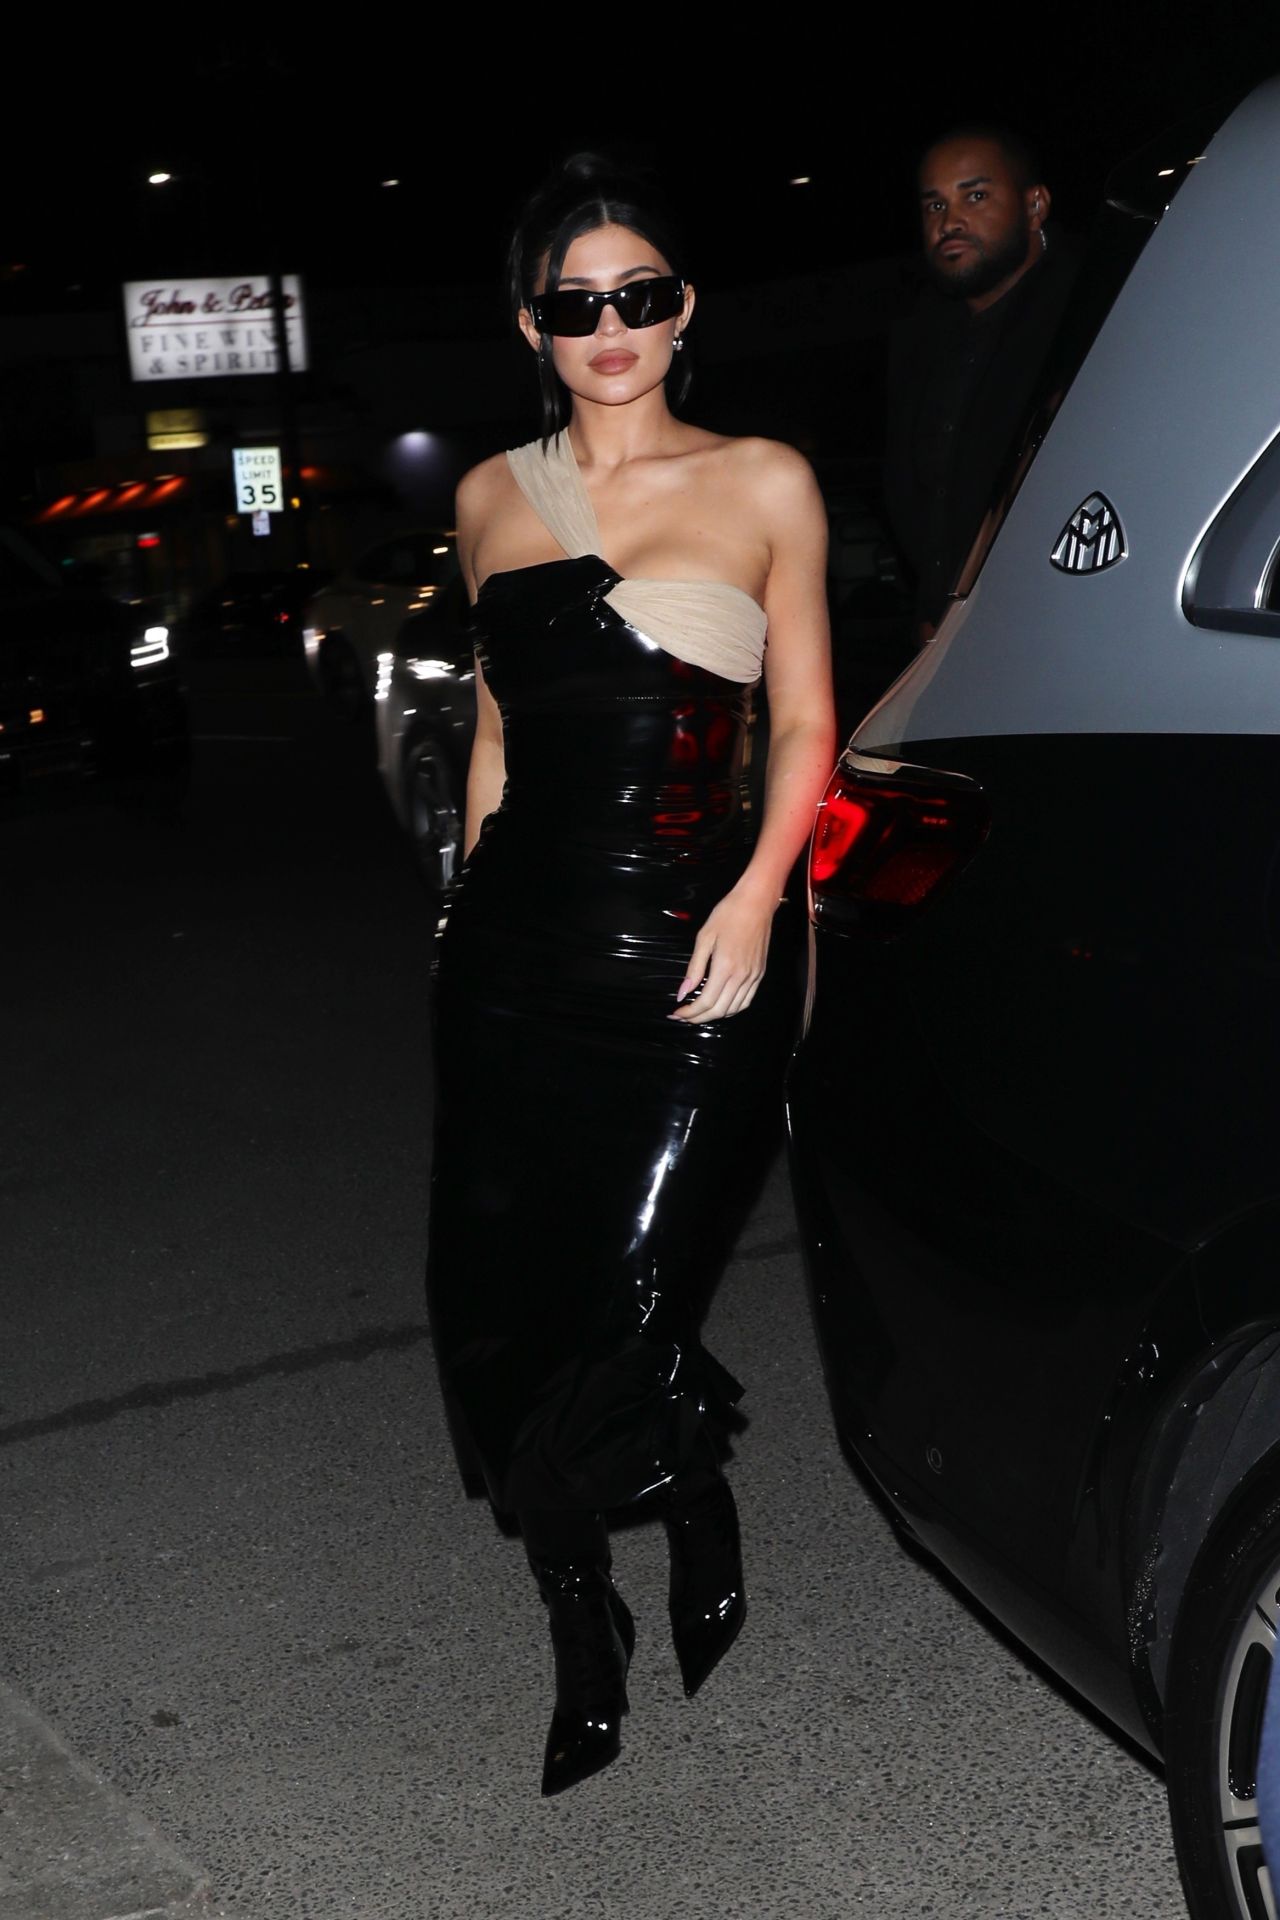 Kylie Jenner wore PVC Long Dress @ Sunny Vodka event 2022